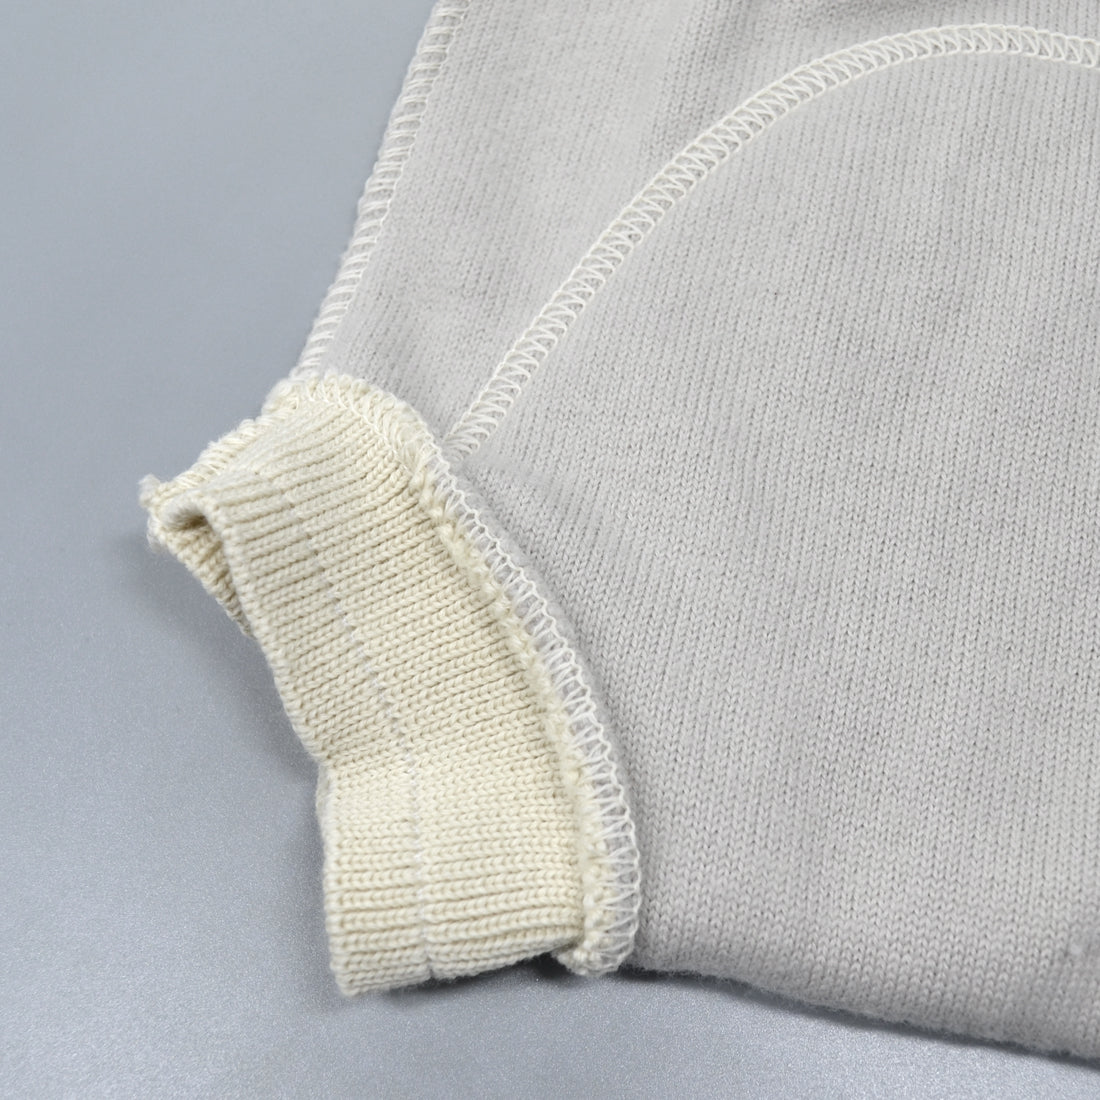 LANACare NIGHT Diaper Cover (Soaker) in Organic Merino Wool